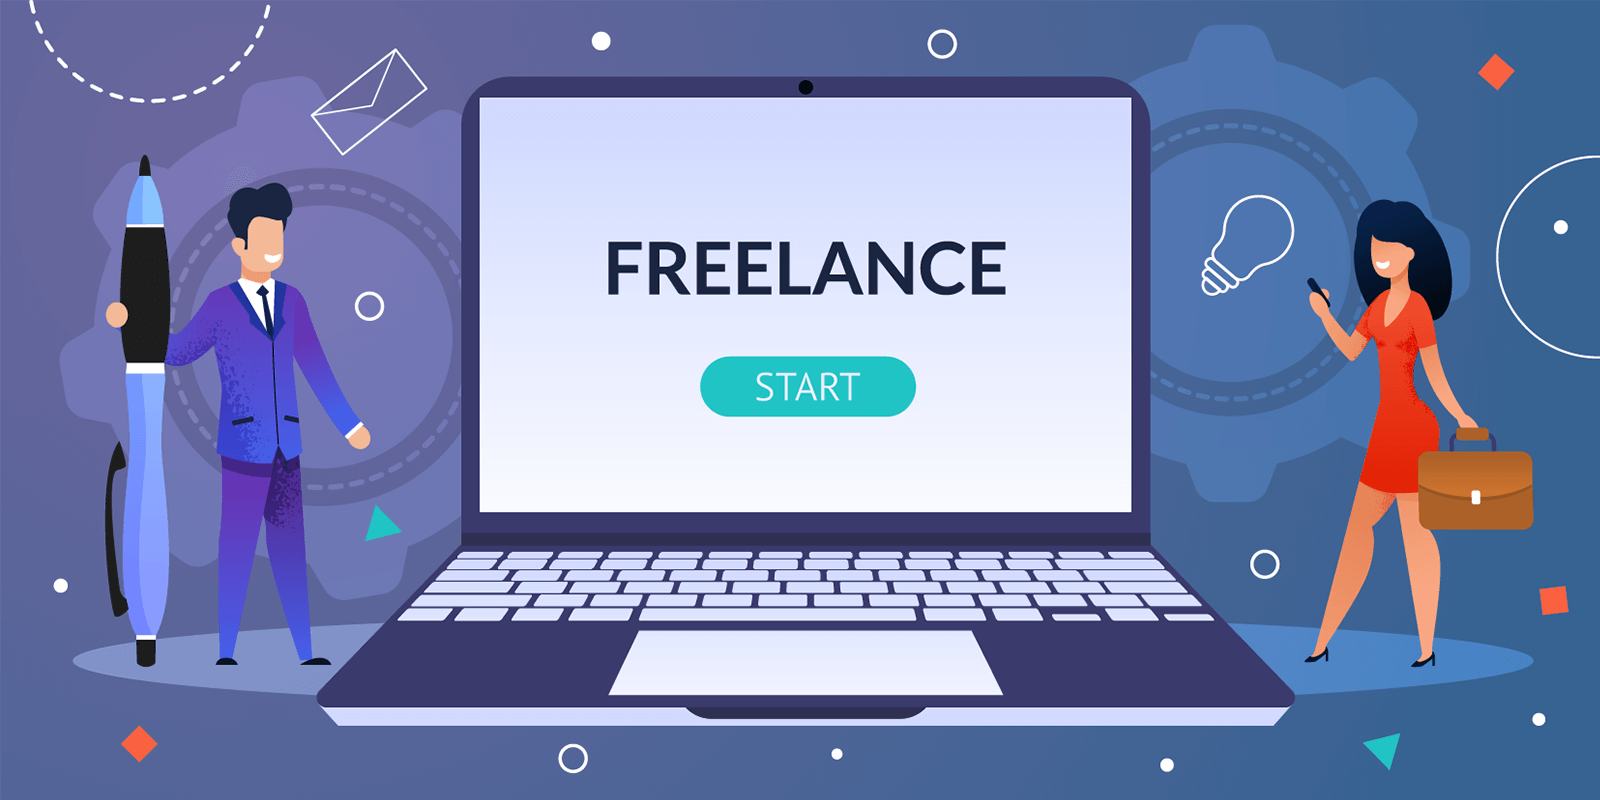 Kiếm tiền Online từ việc freelancer